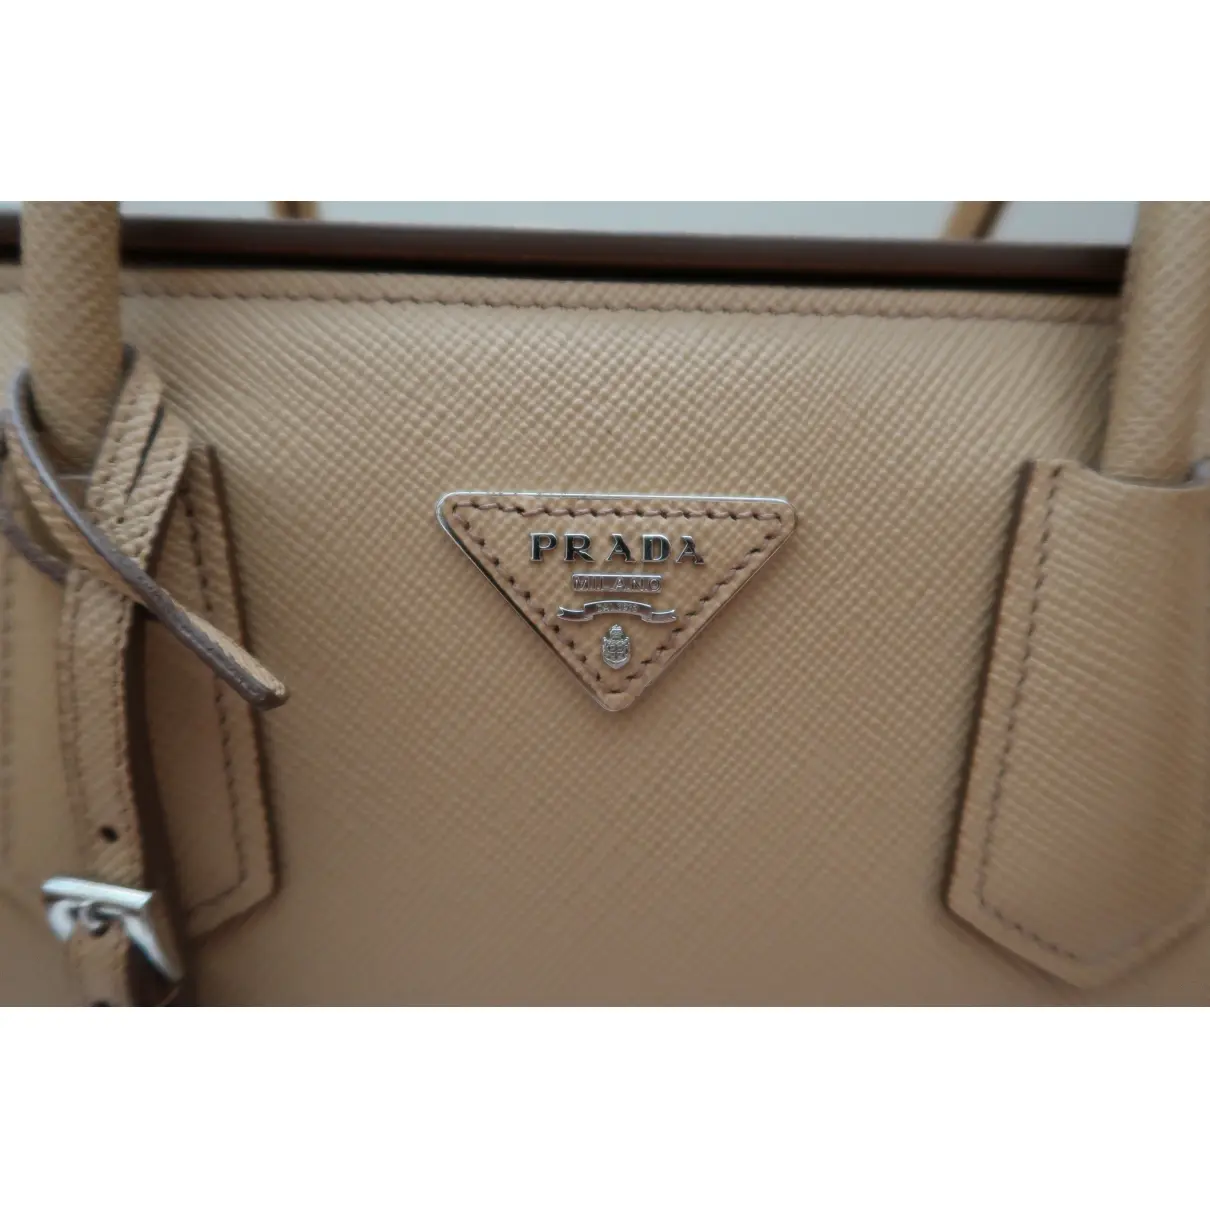 Buy Prada Bibliothèque leather tote online